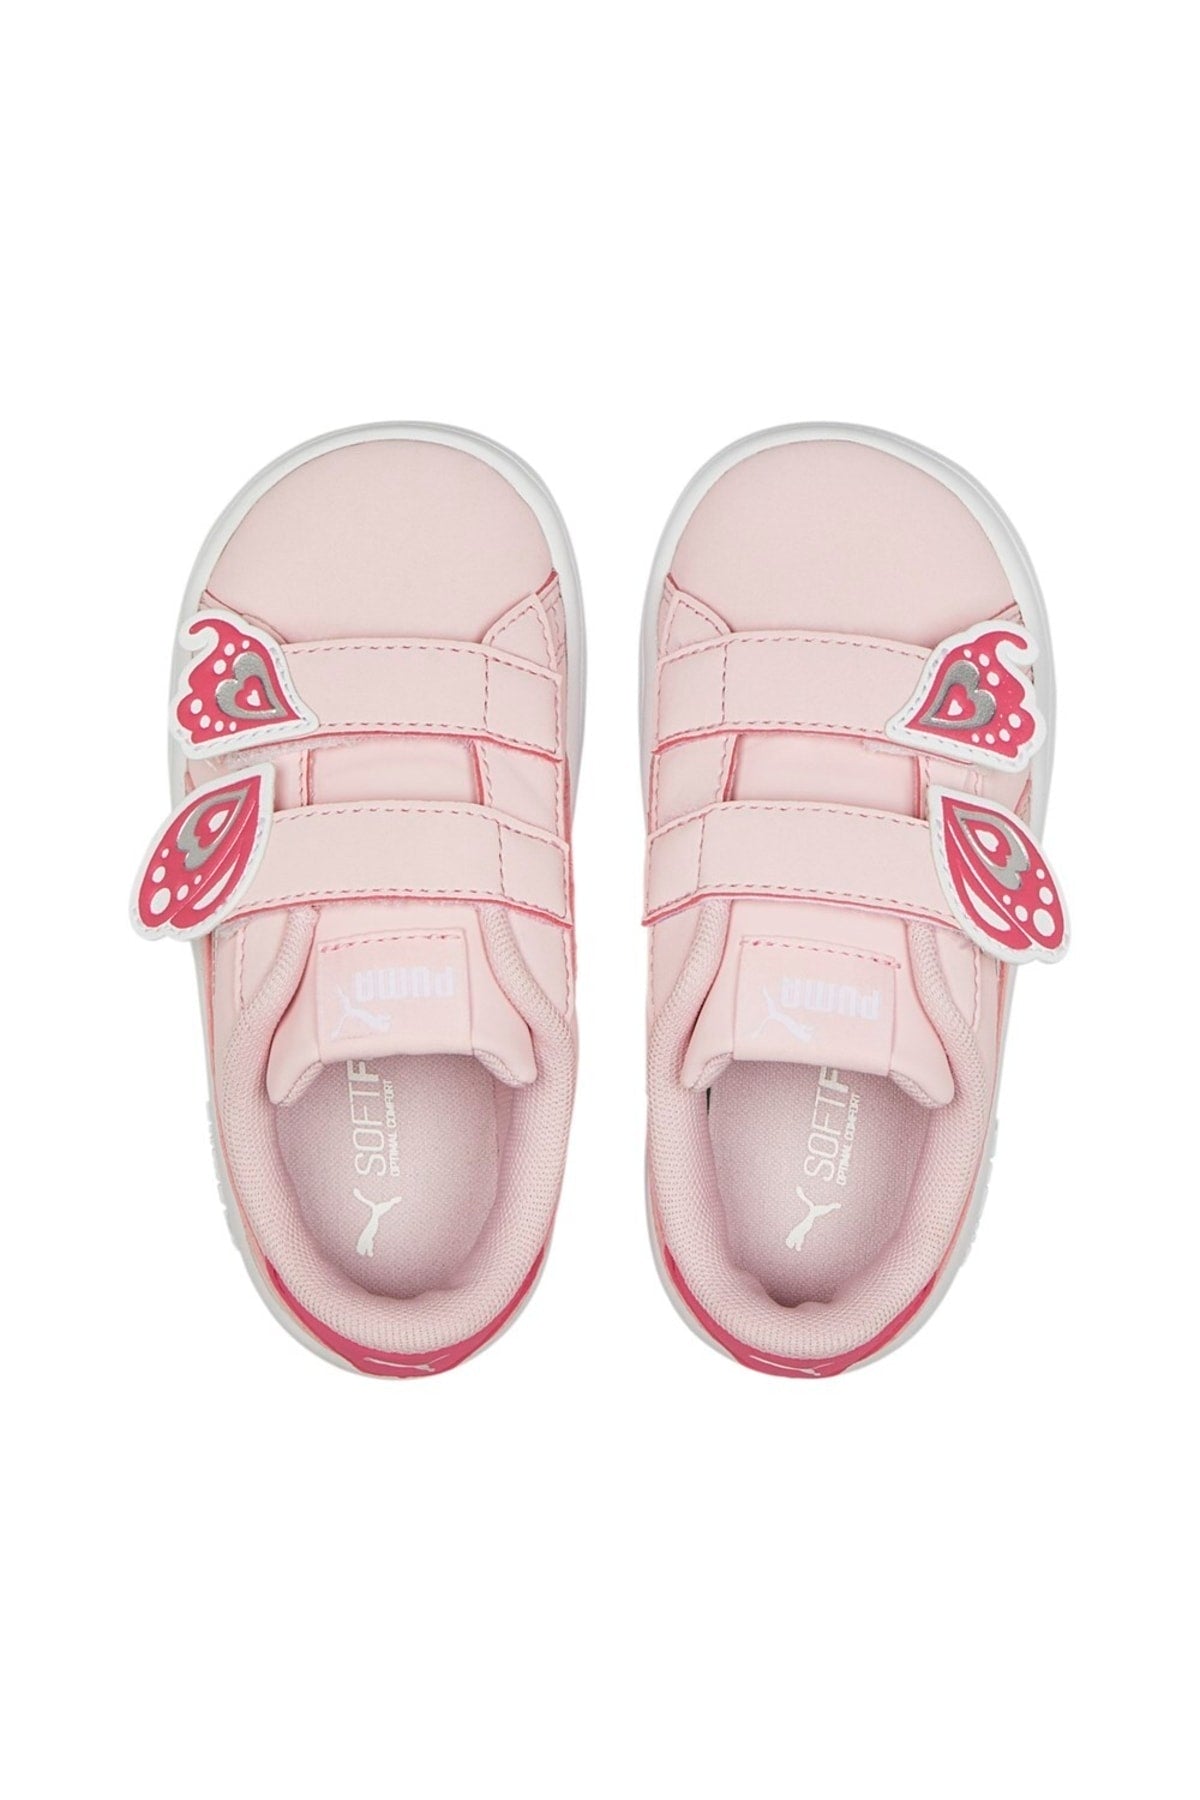 Smash V2 Bfly V Inf - Pink Baby Sneakers